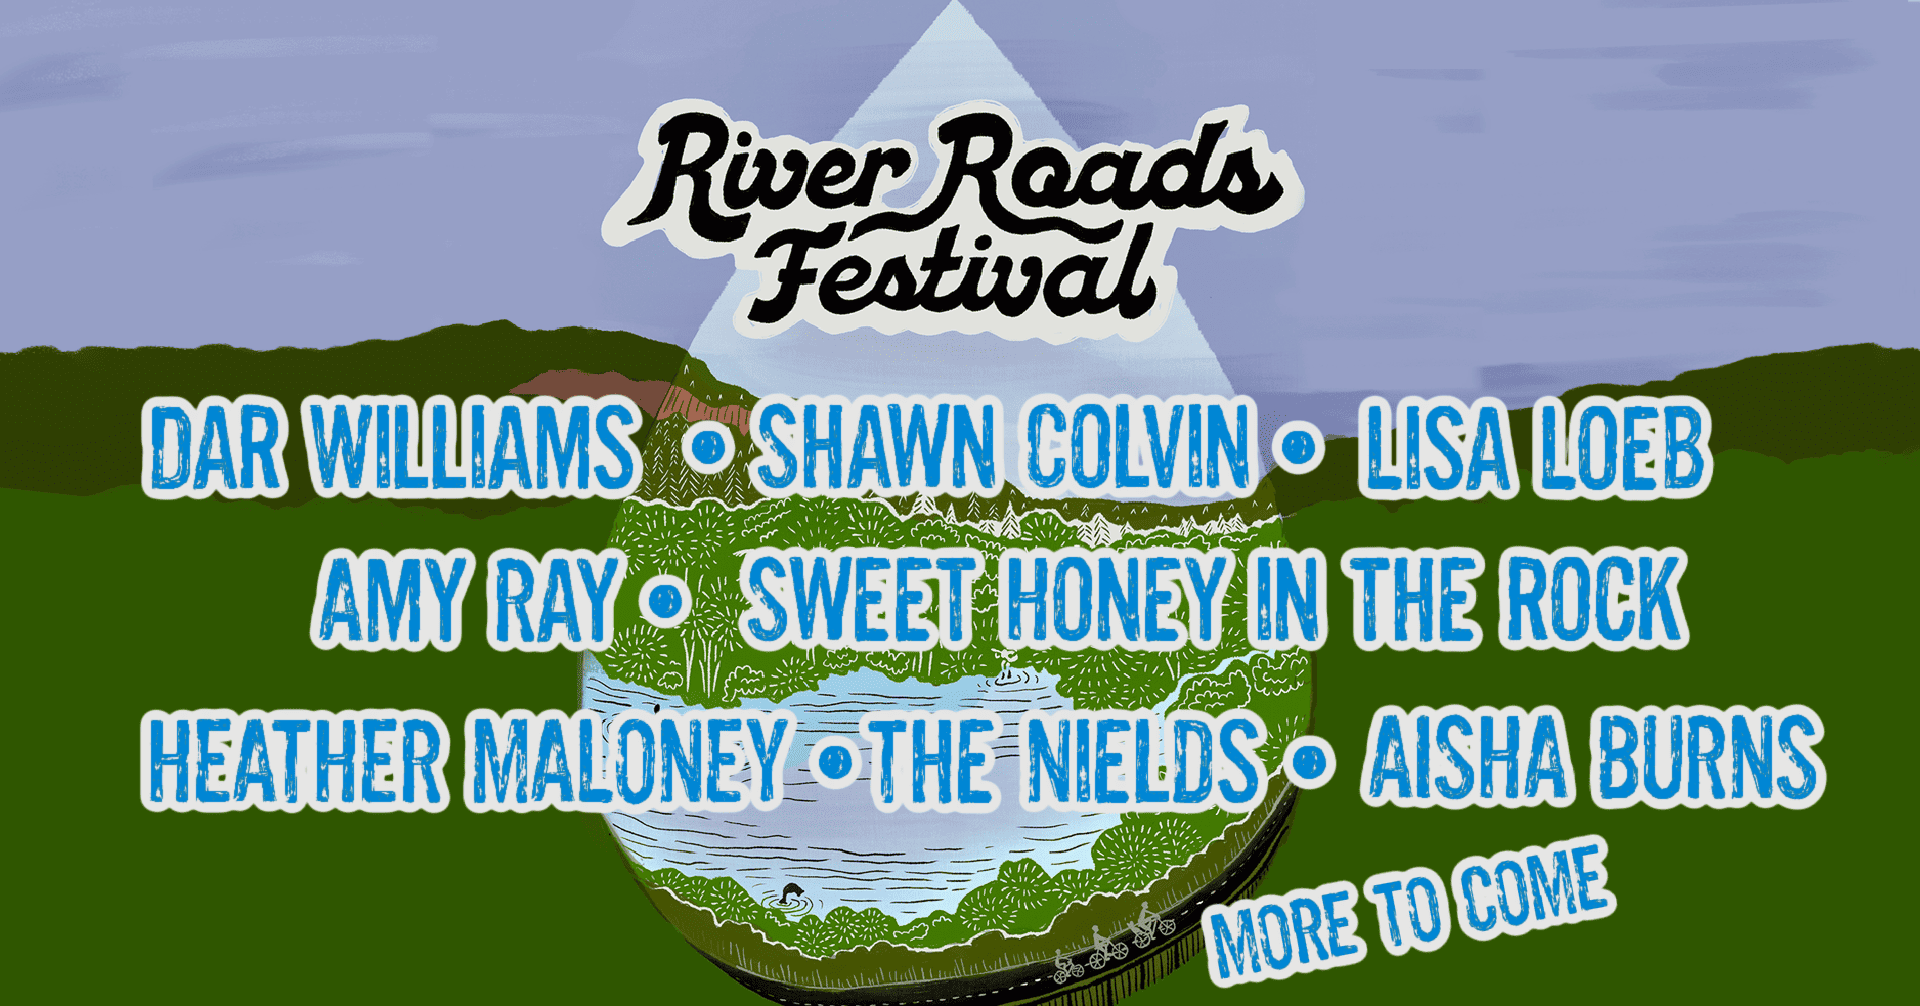 River Roads Festival Laudable Productions